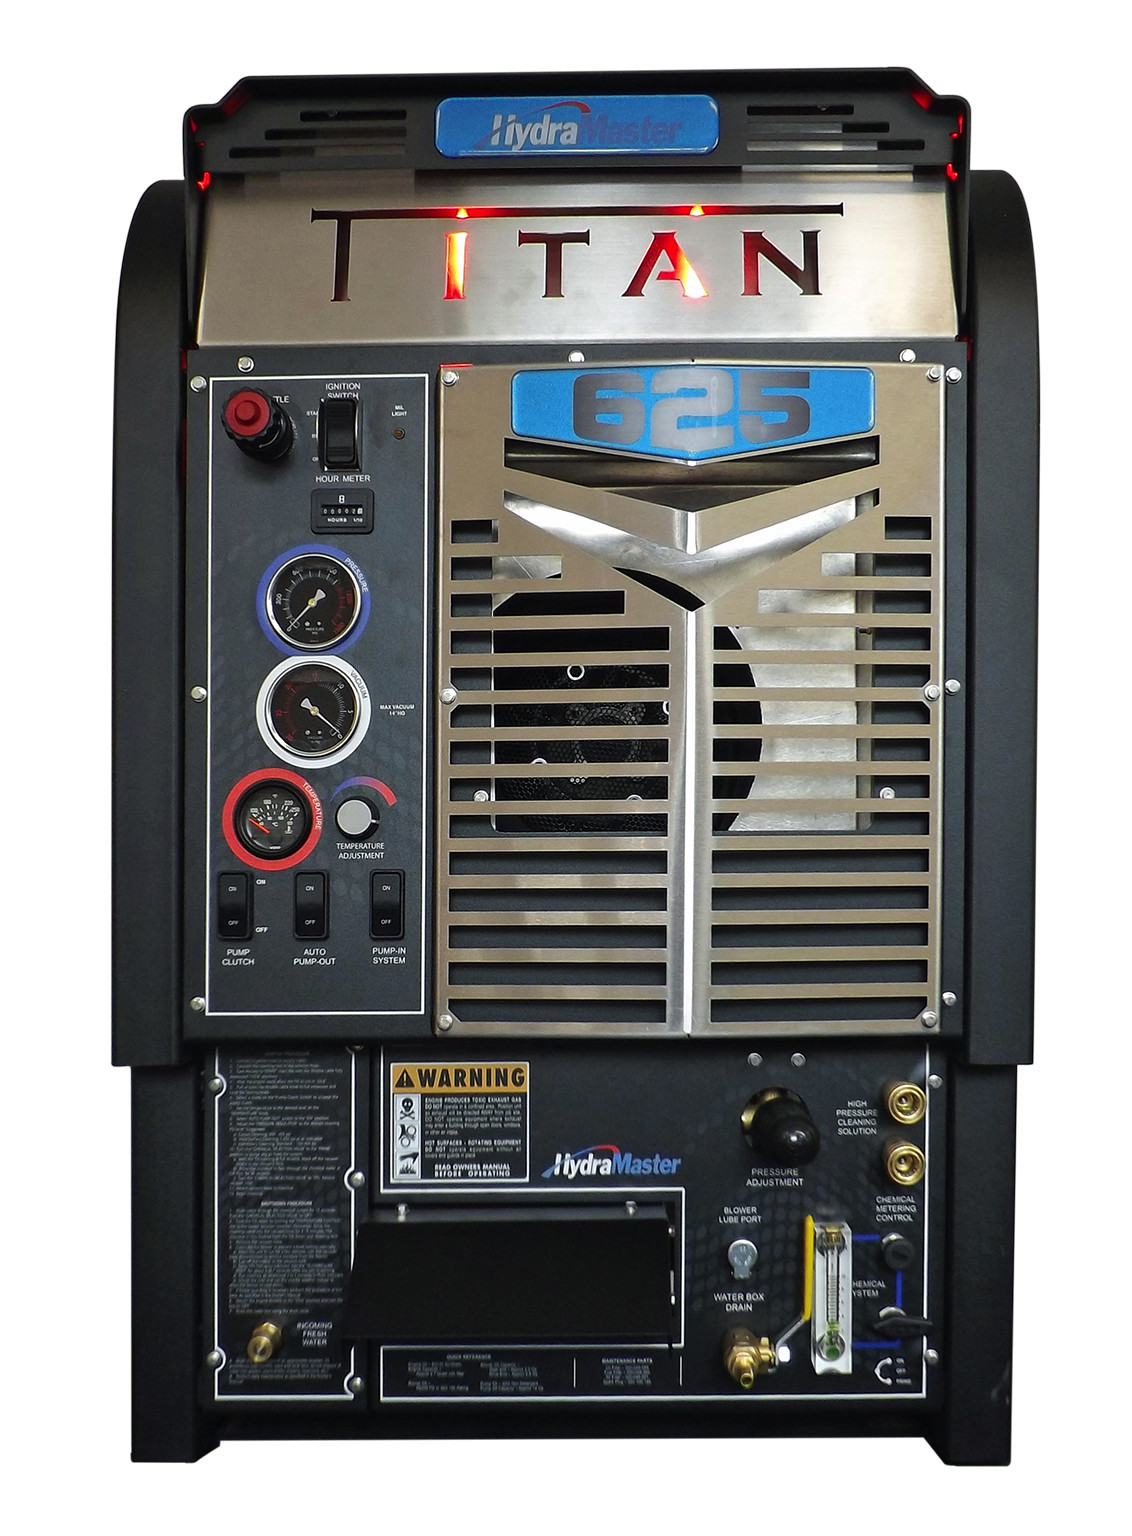 Hydramaster Titan 625